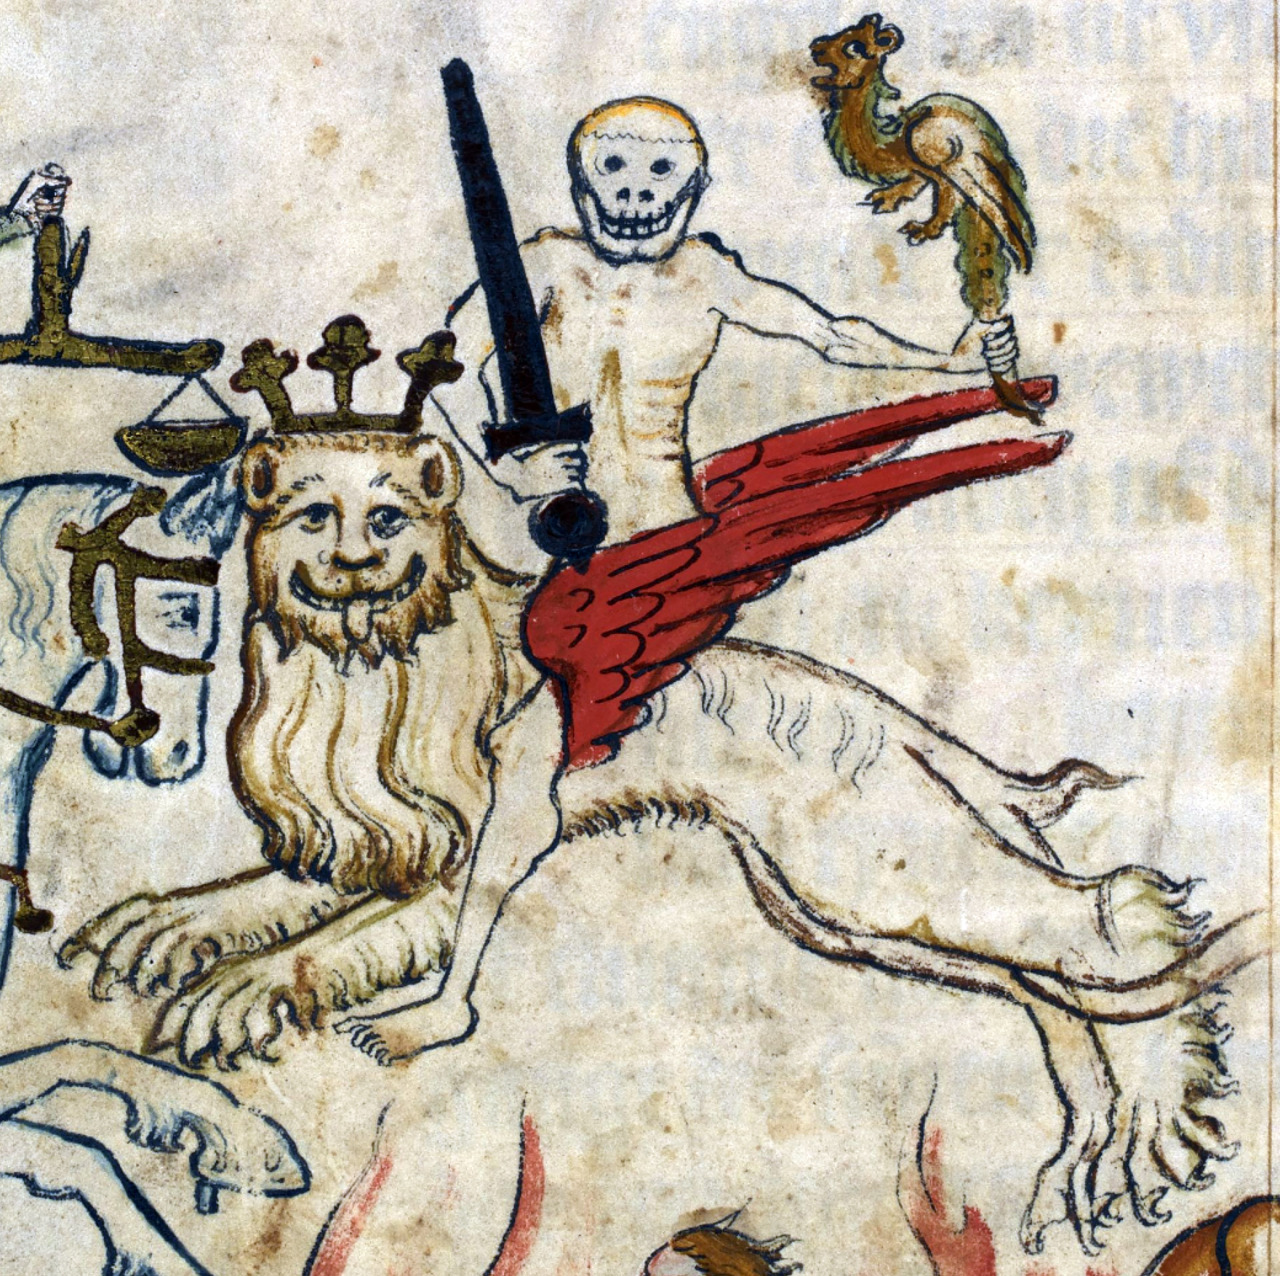 discardingimages:

The Fourth Rider of the Apocalypse
Apocalypse, Thuringia ca. 1350-1370
BL, Add 15243, fol. 12r
